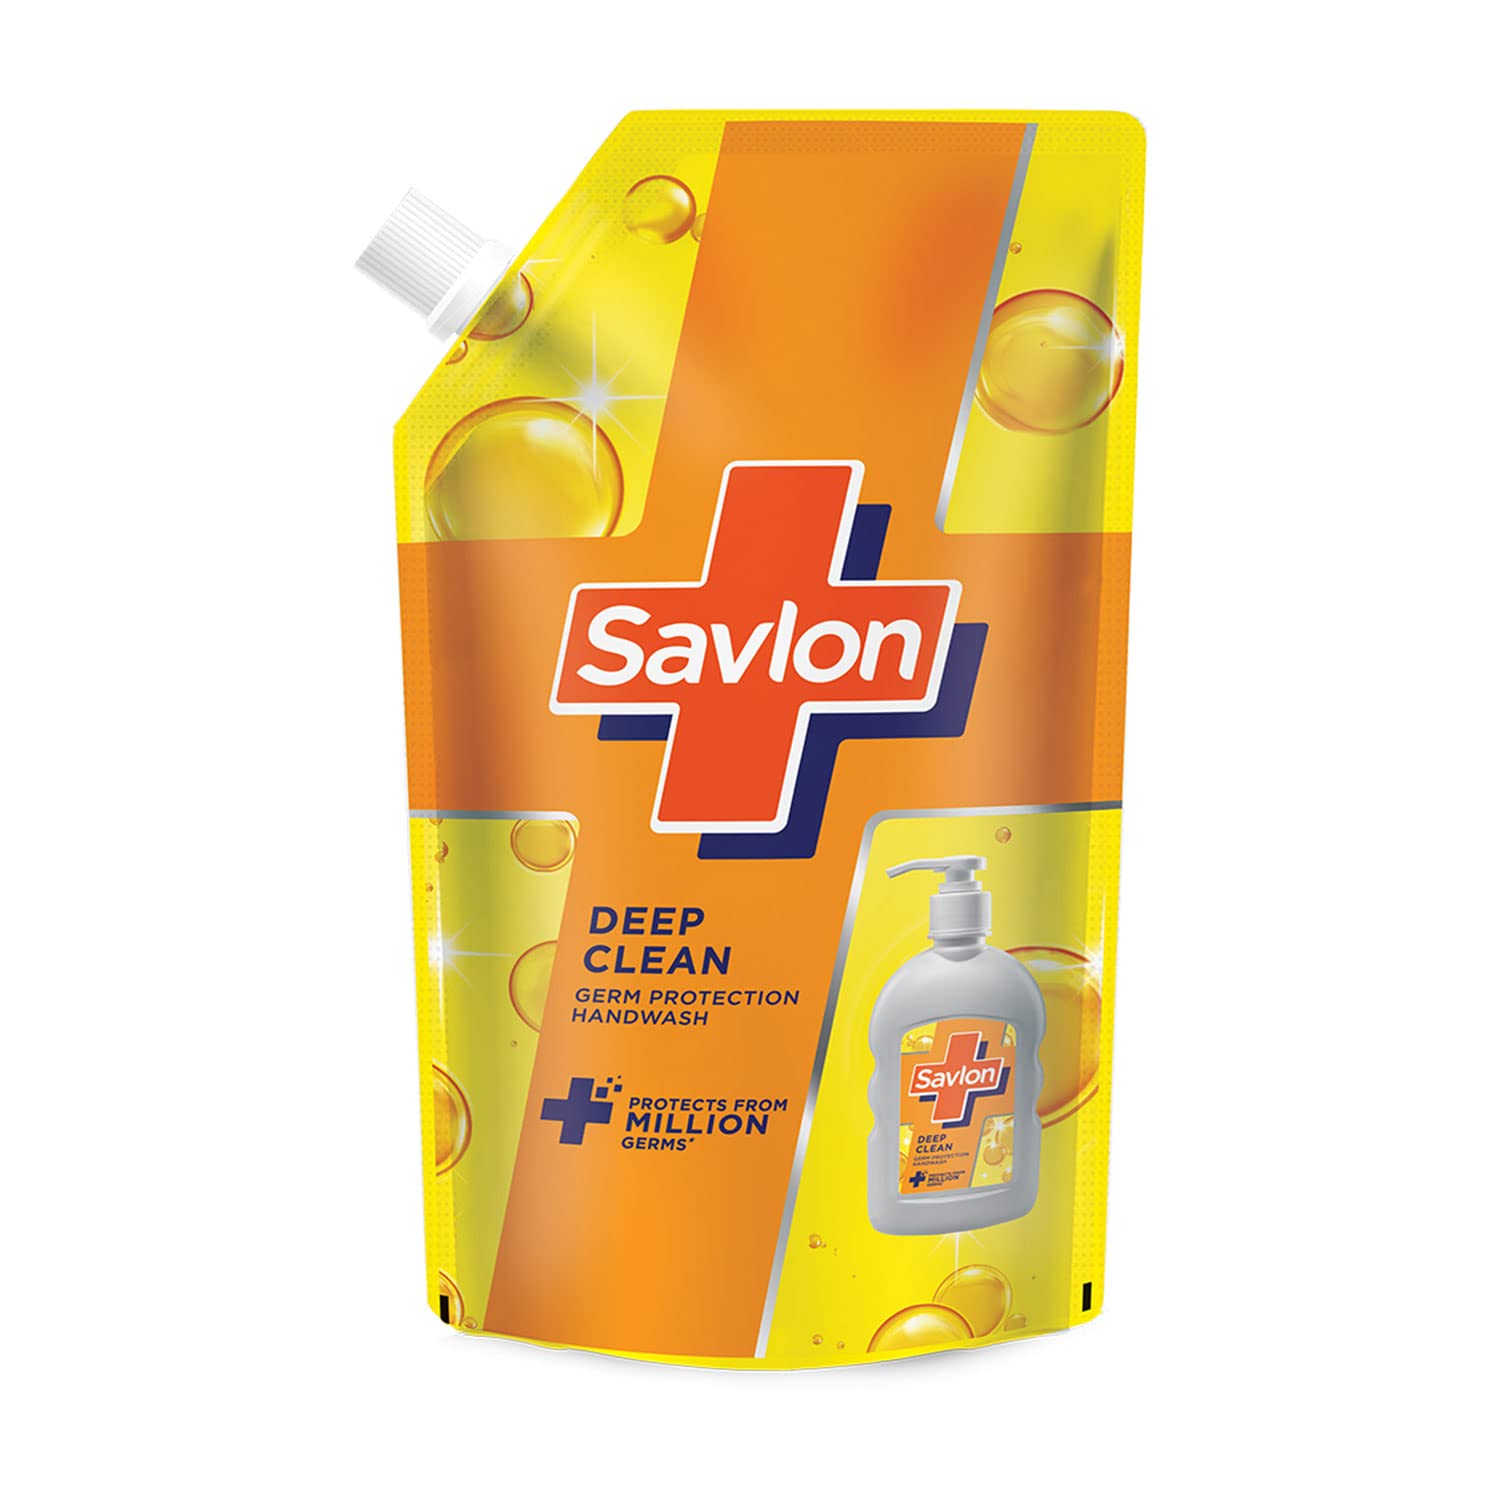 Savlon deep clean germ protection handwash